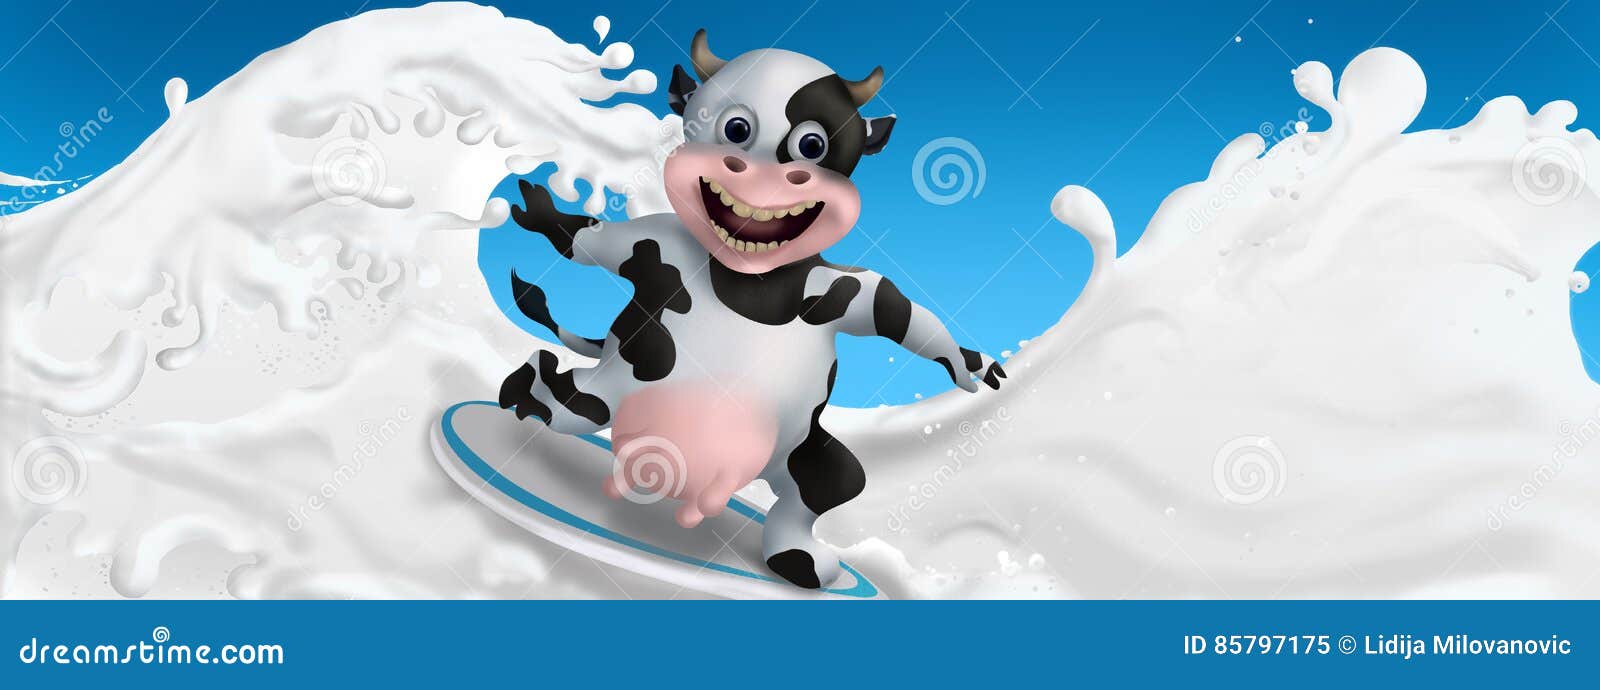 cow surfs on the milk